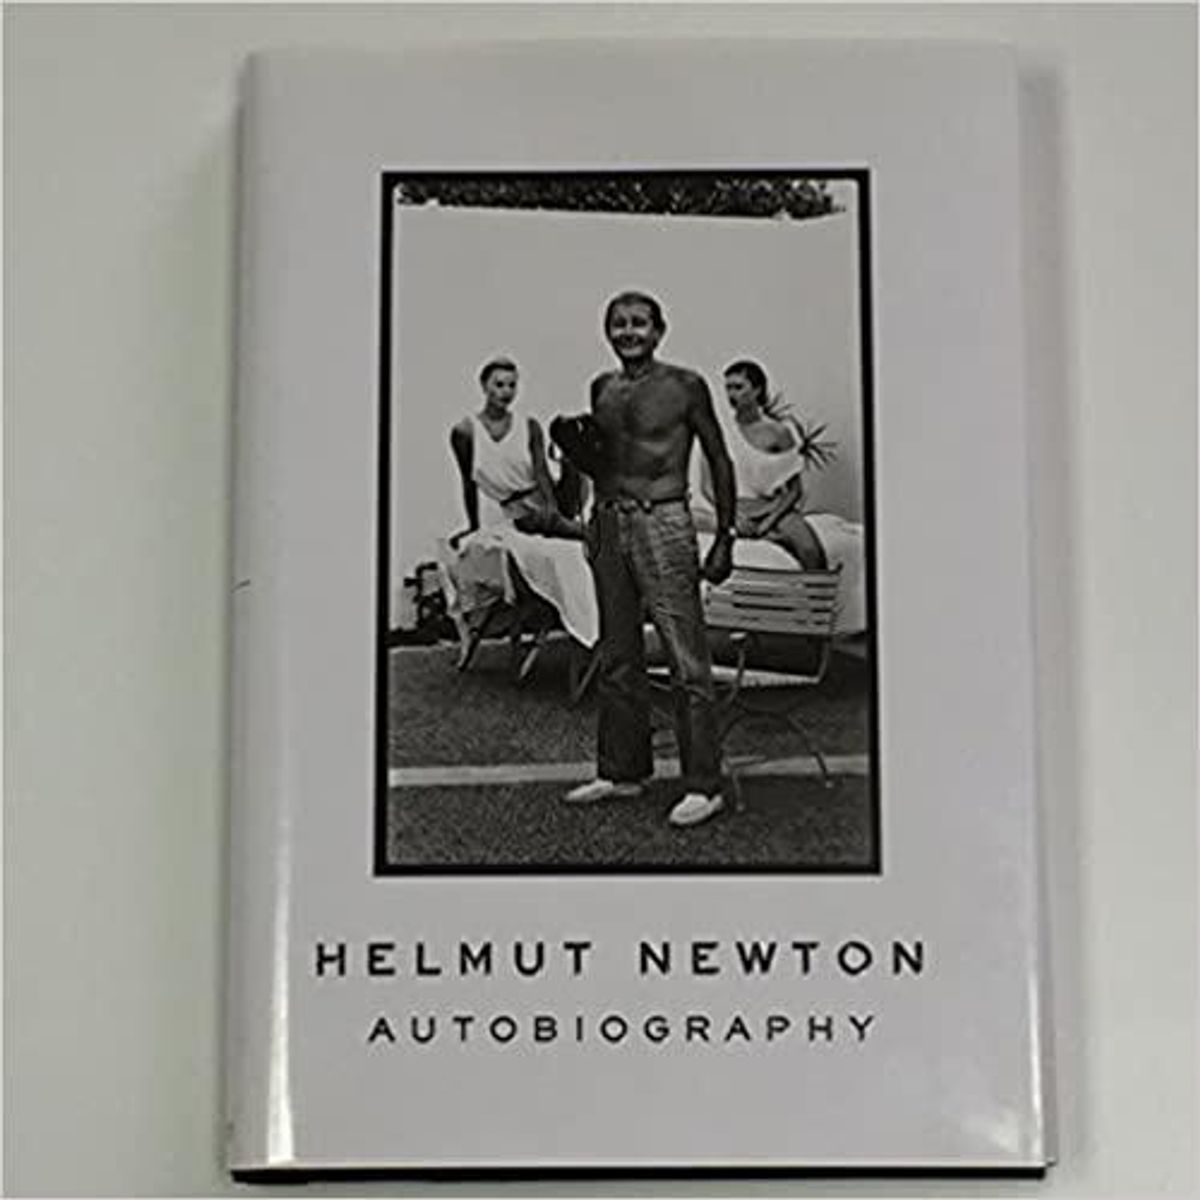 By Helmut Newton Autobiography